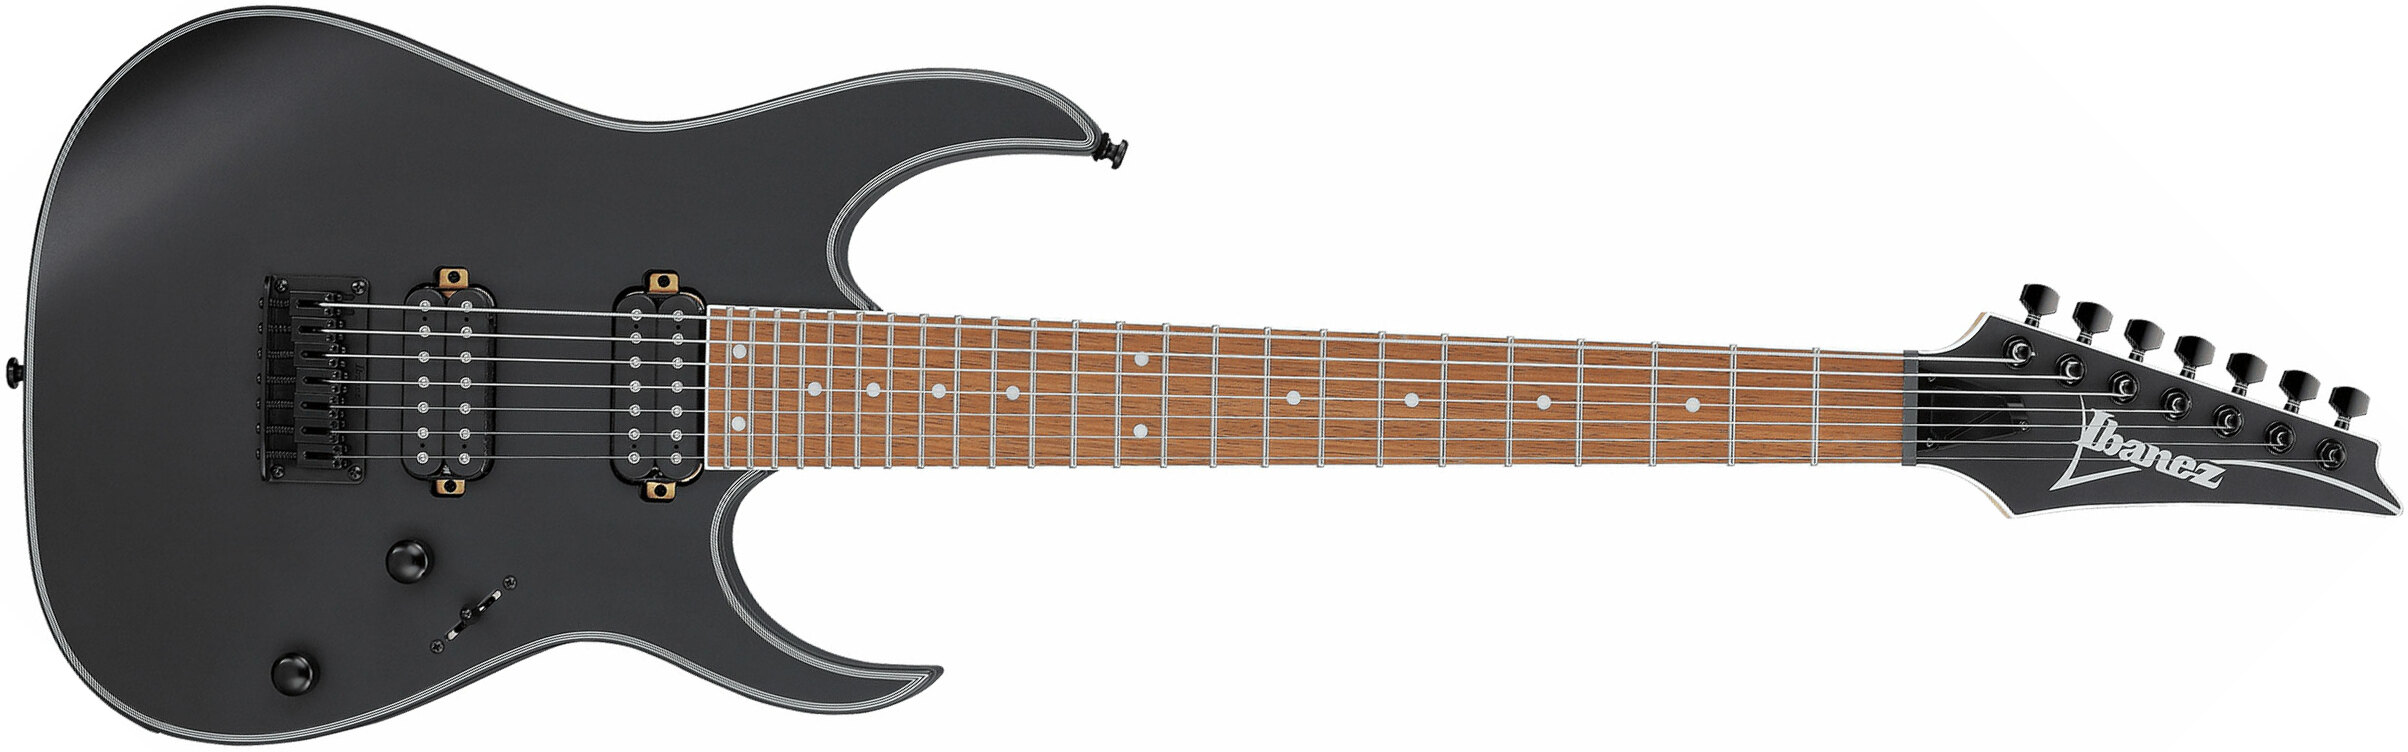 Ibanez Rg7421ex Bkf Standard 7c 2h Ht Jat - Black Flat - 7 string electric guitar - Main picture